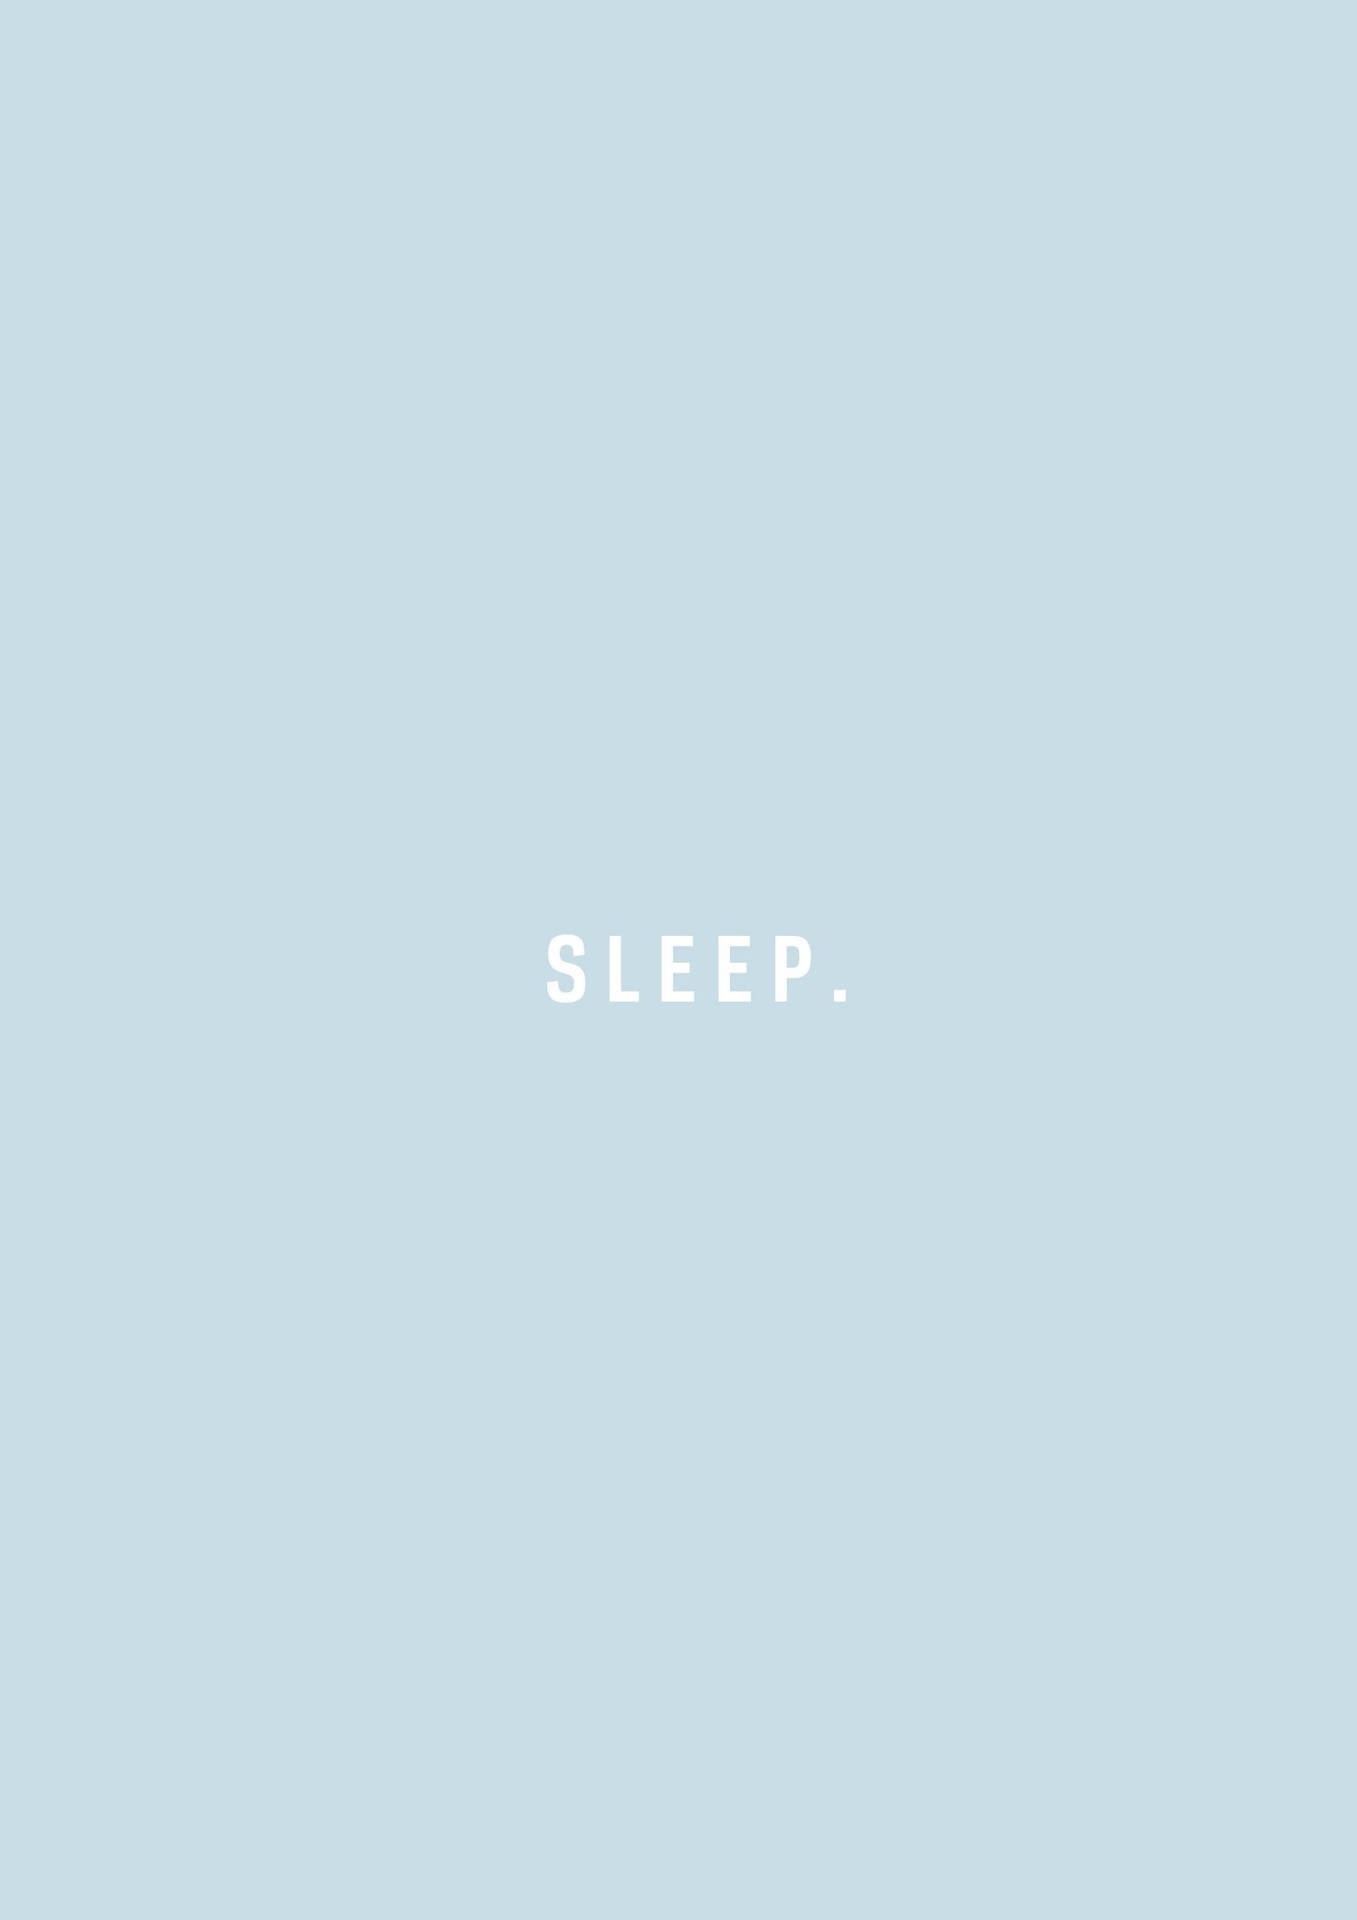 "Sleep" On Blue Aesthetic Quote iPhone Wallpaper